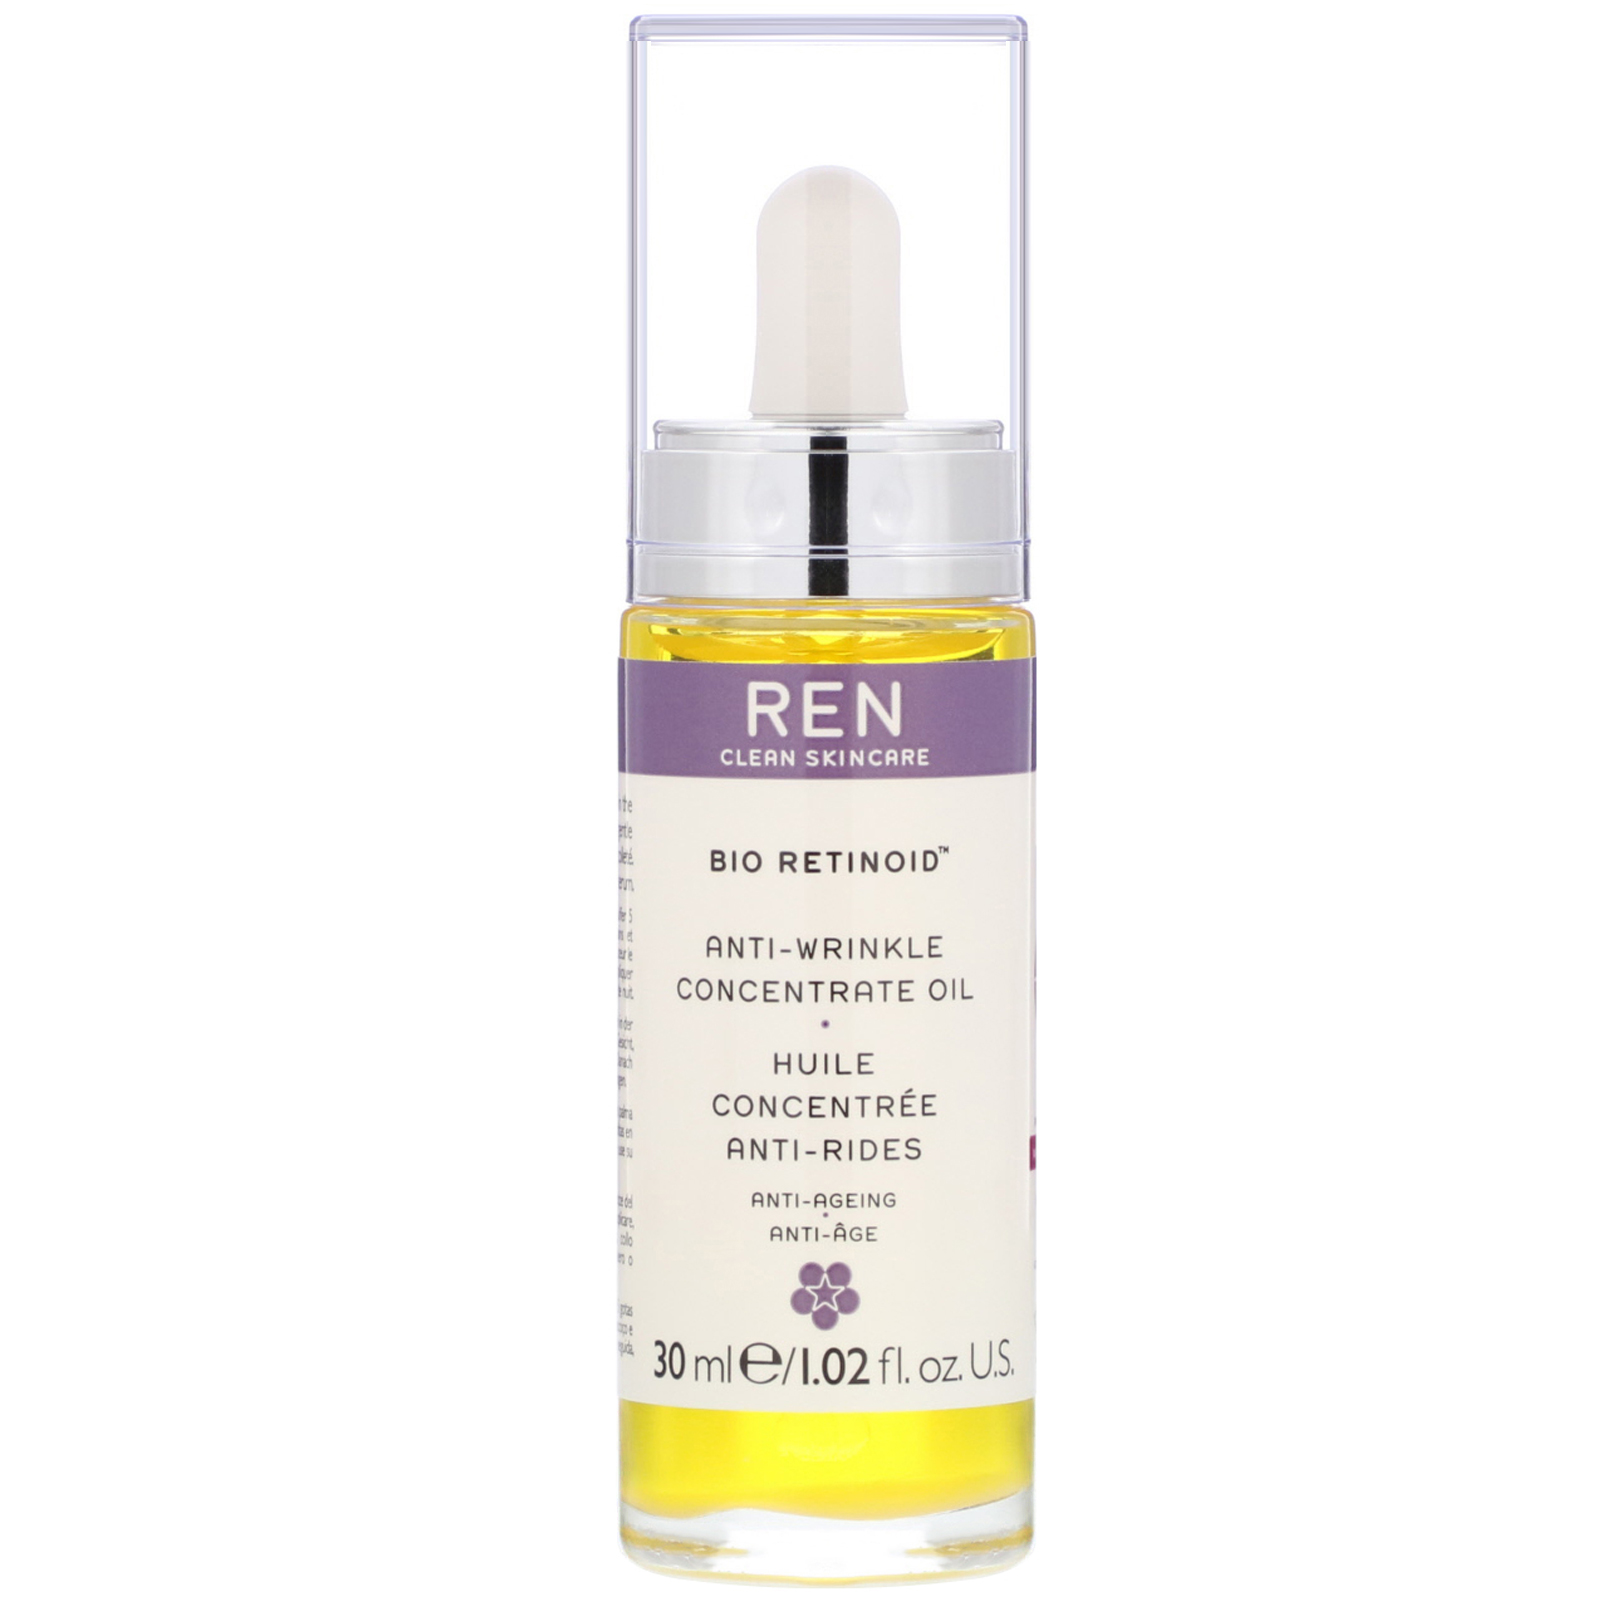 ren bio retinoid anti aging concentrate review